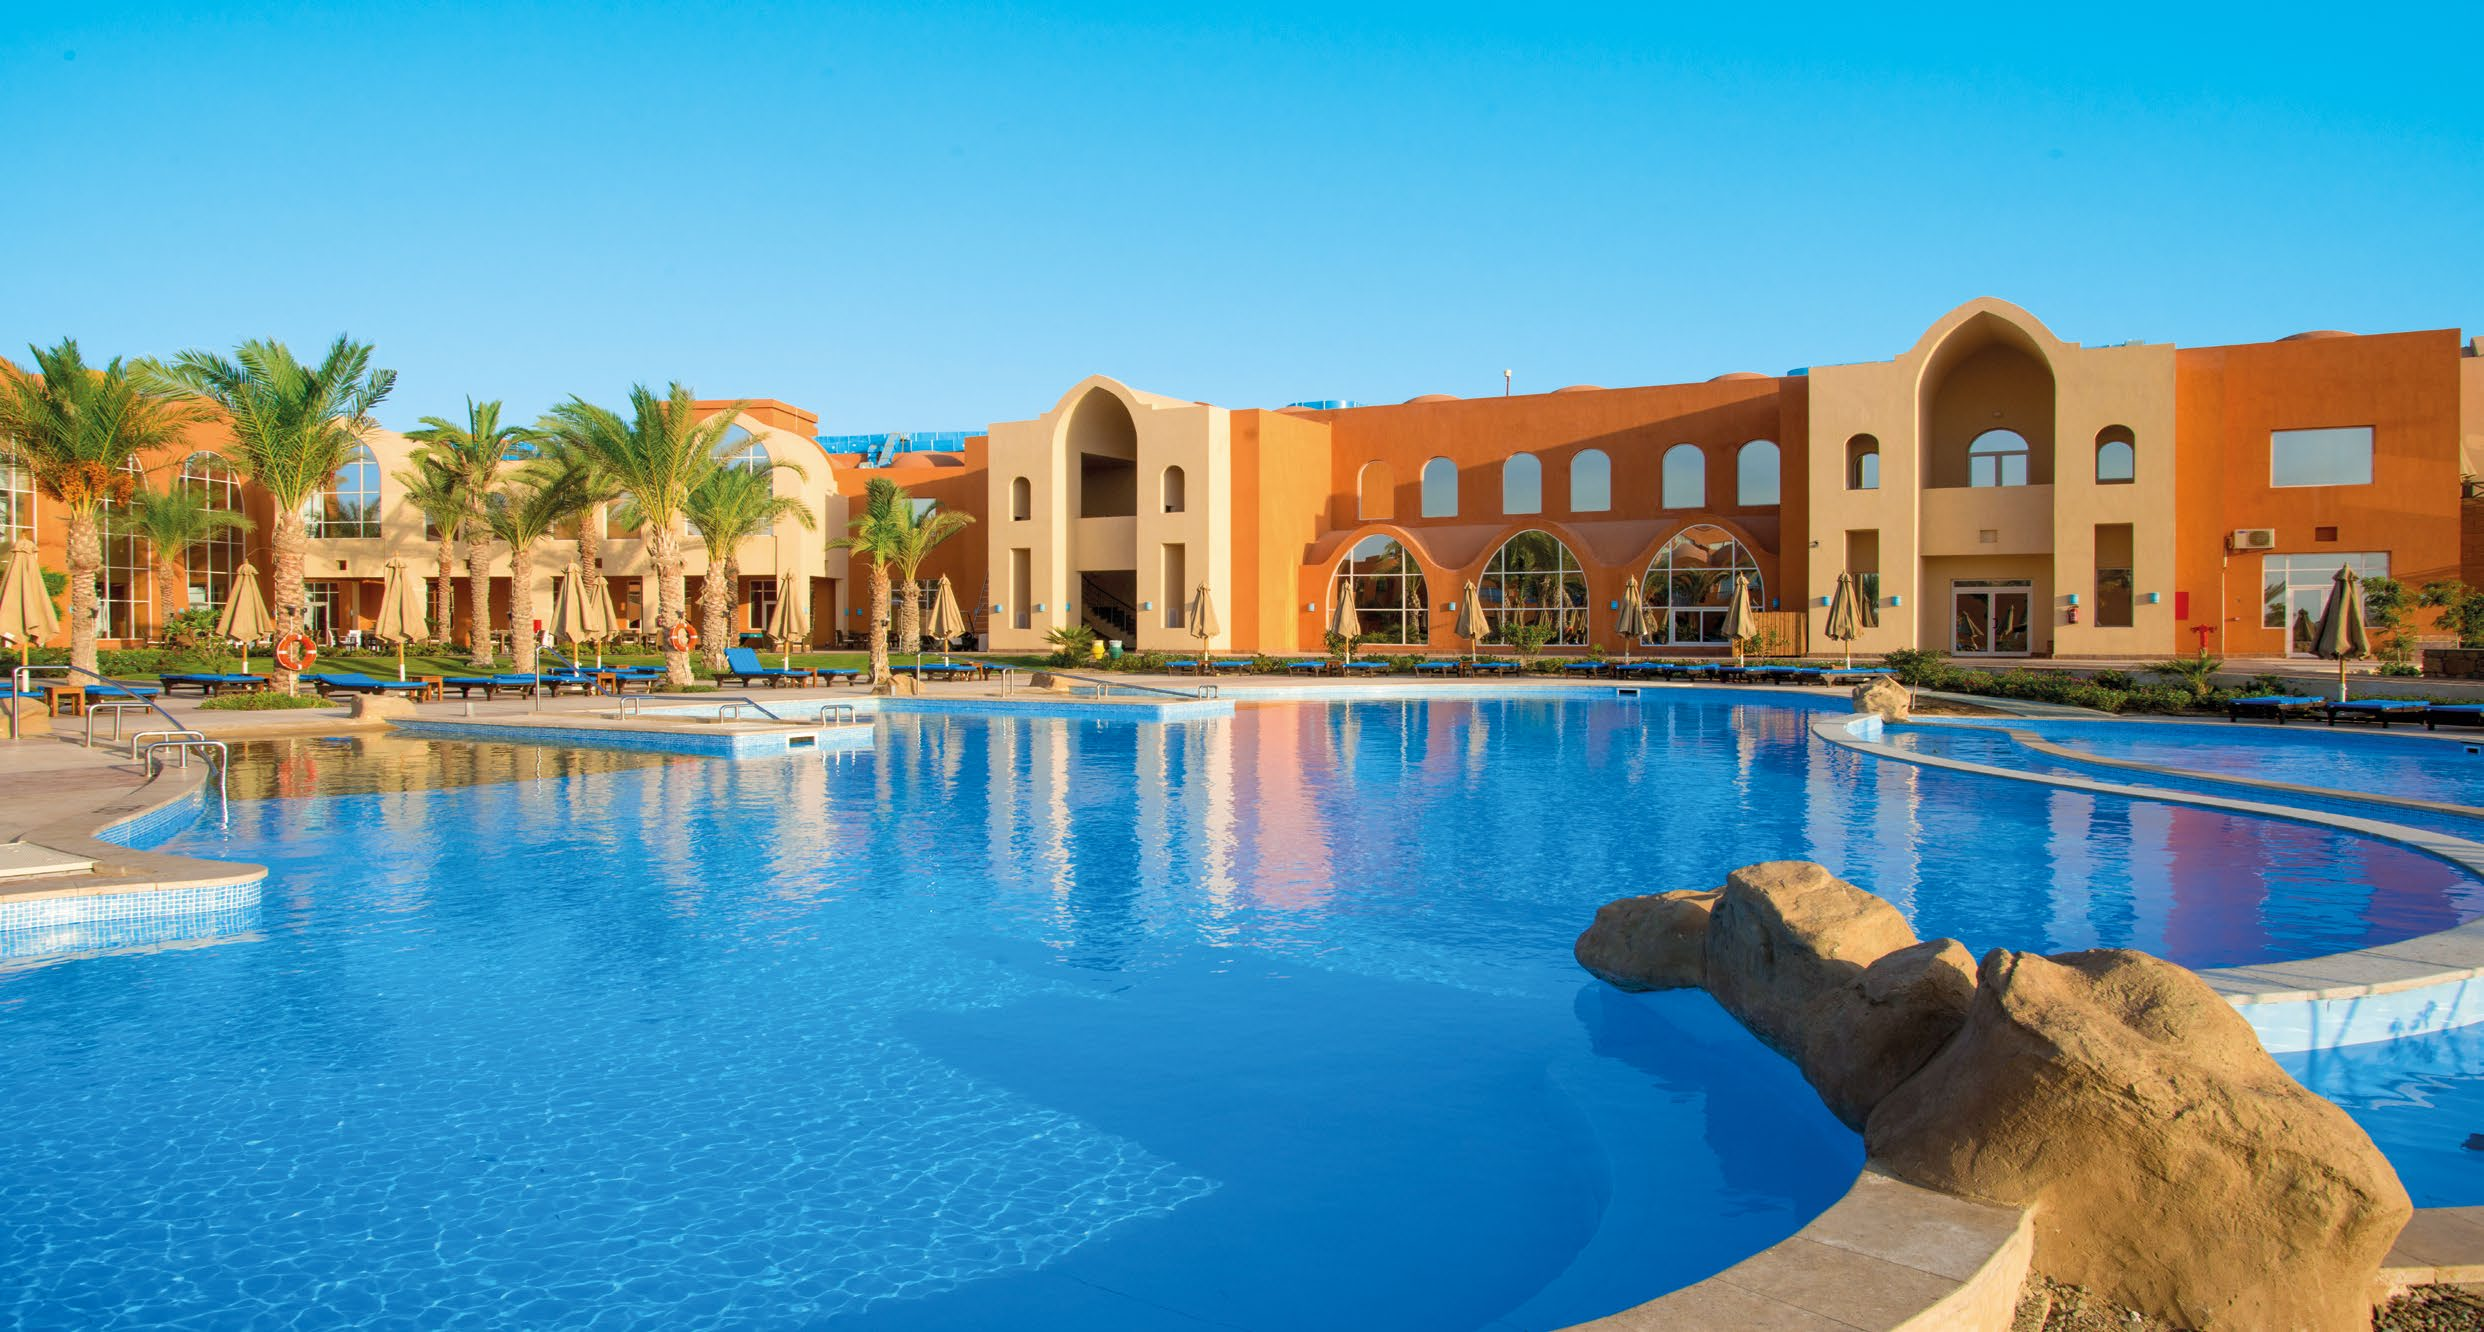 6 EGYPT ~ MARSA ALAM novinka pre leto 2017 cenový hit nové novinka v ponuke priamo na pláži od 416 HOTEL Novotel Marsa Alam www.accorhotels.com/gb/hotel-8541-novotel-marsa-alam/index.